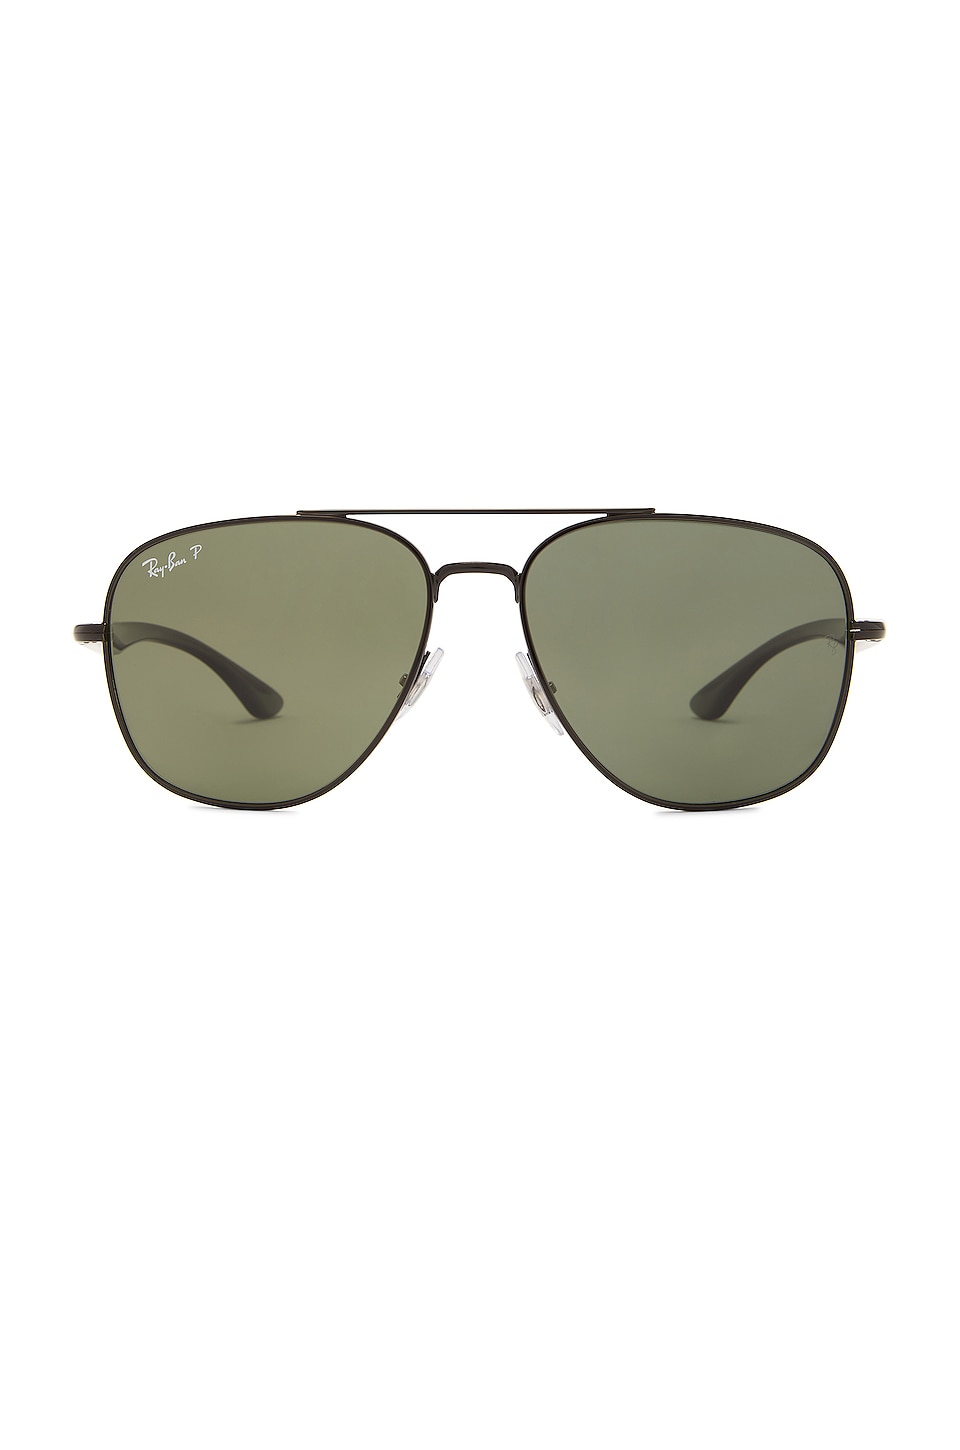 Ray-Ban Sunglasses in Black & Green | REVOLVE